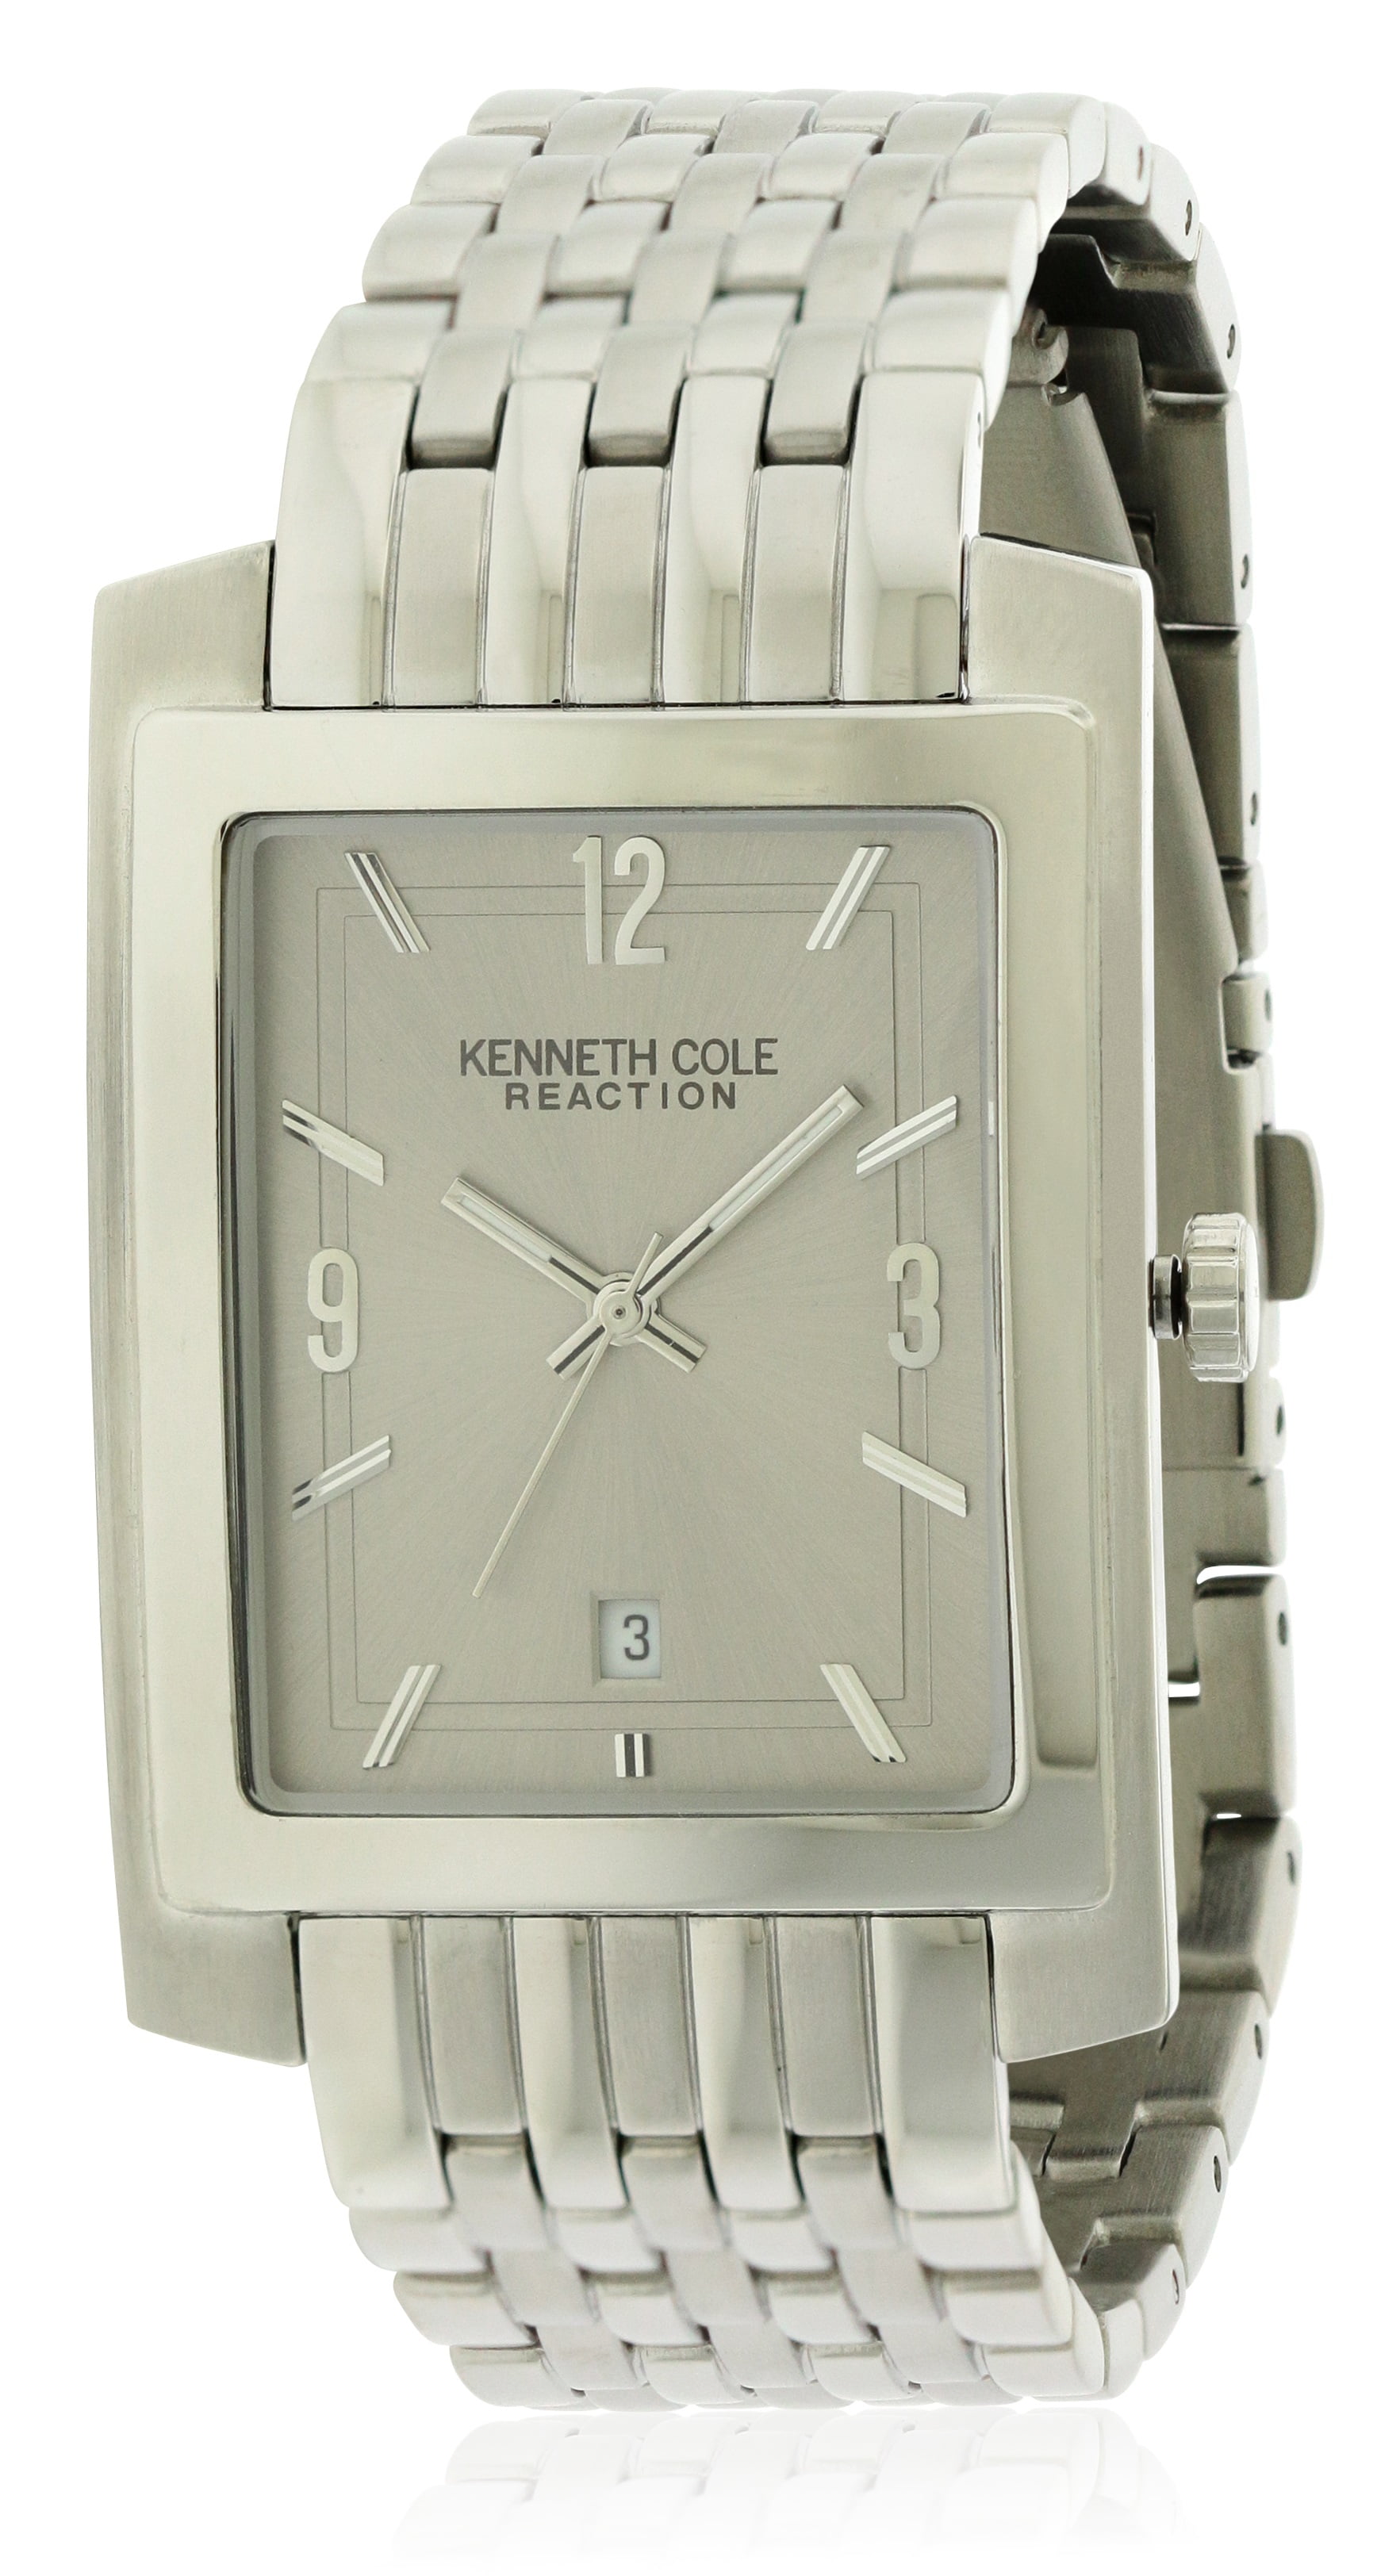 Kenneth Cole Men's Stainless Steel Watch KC3590 - Walmart.com